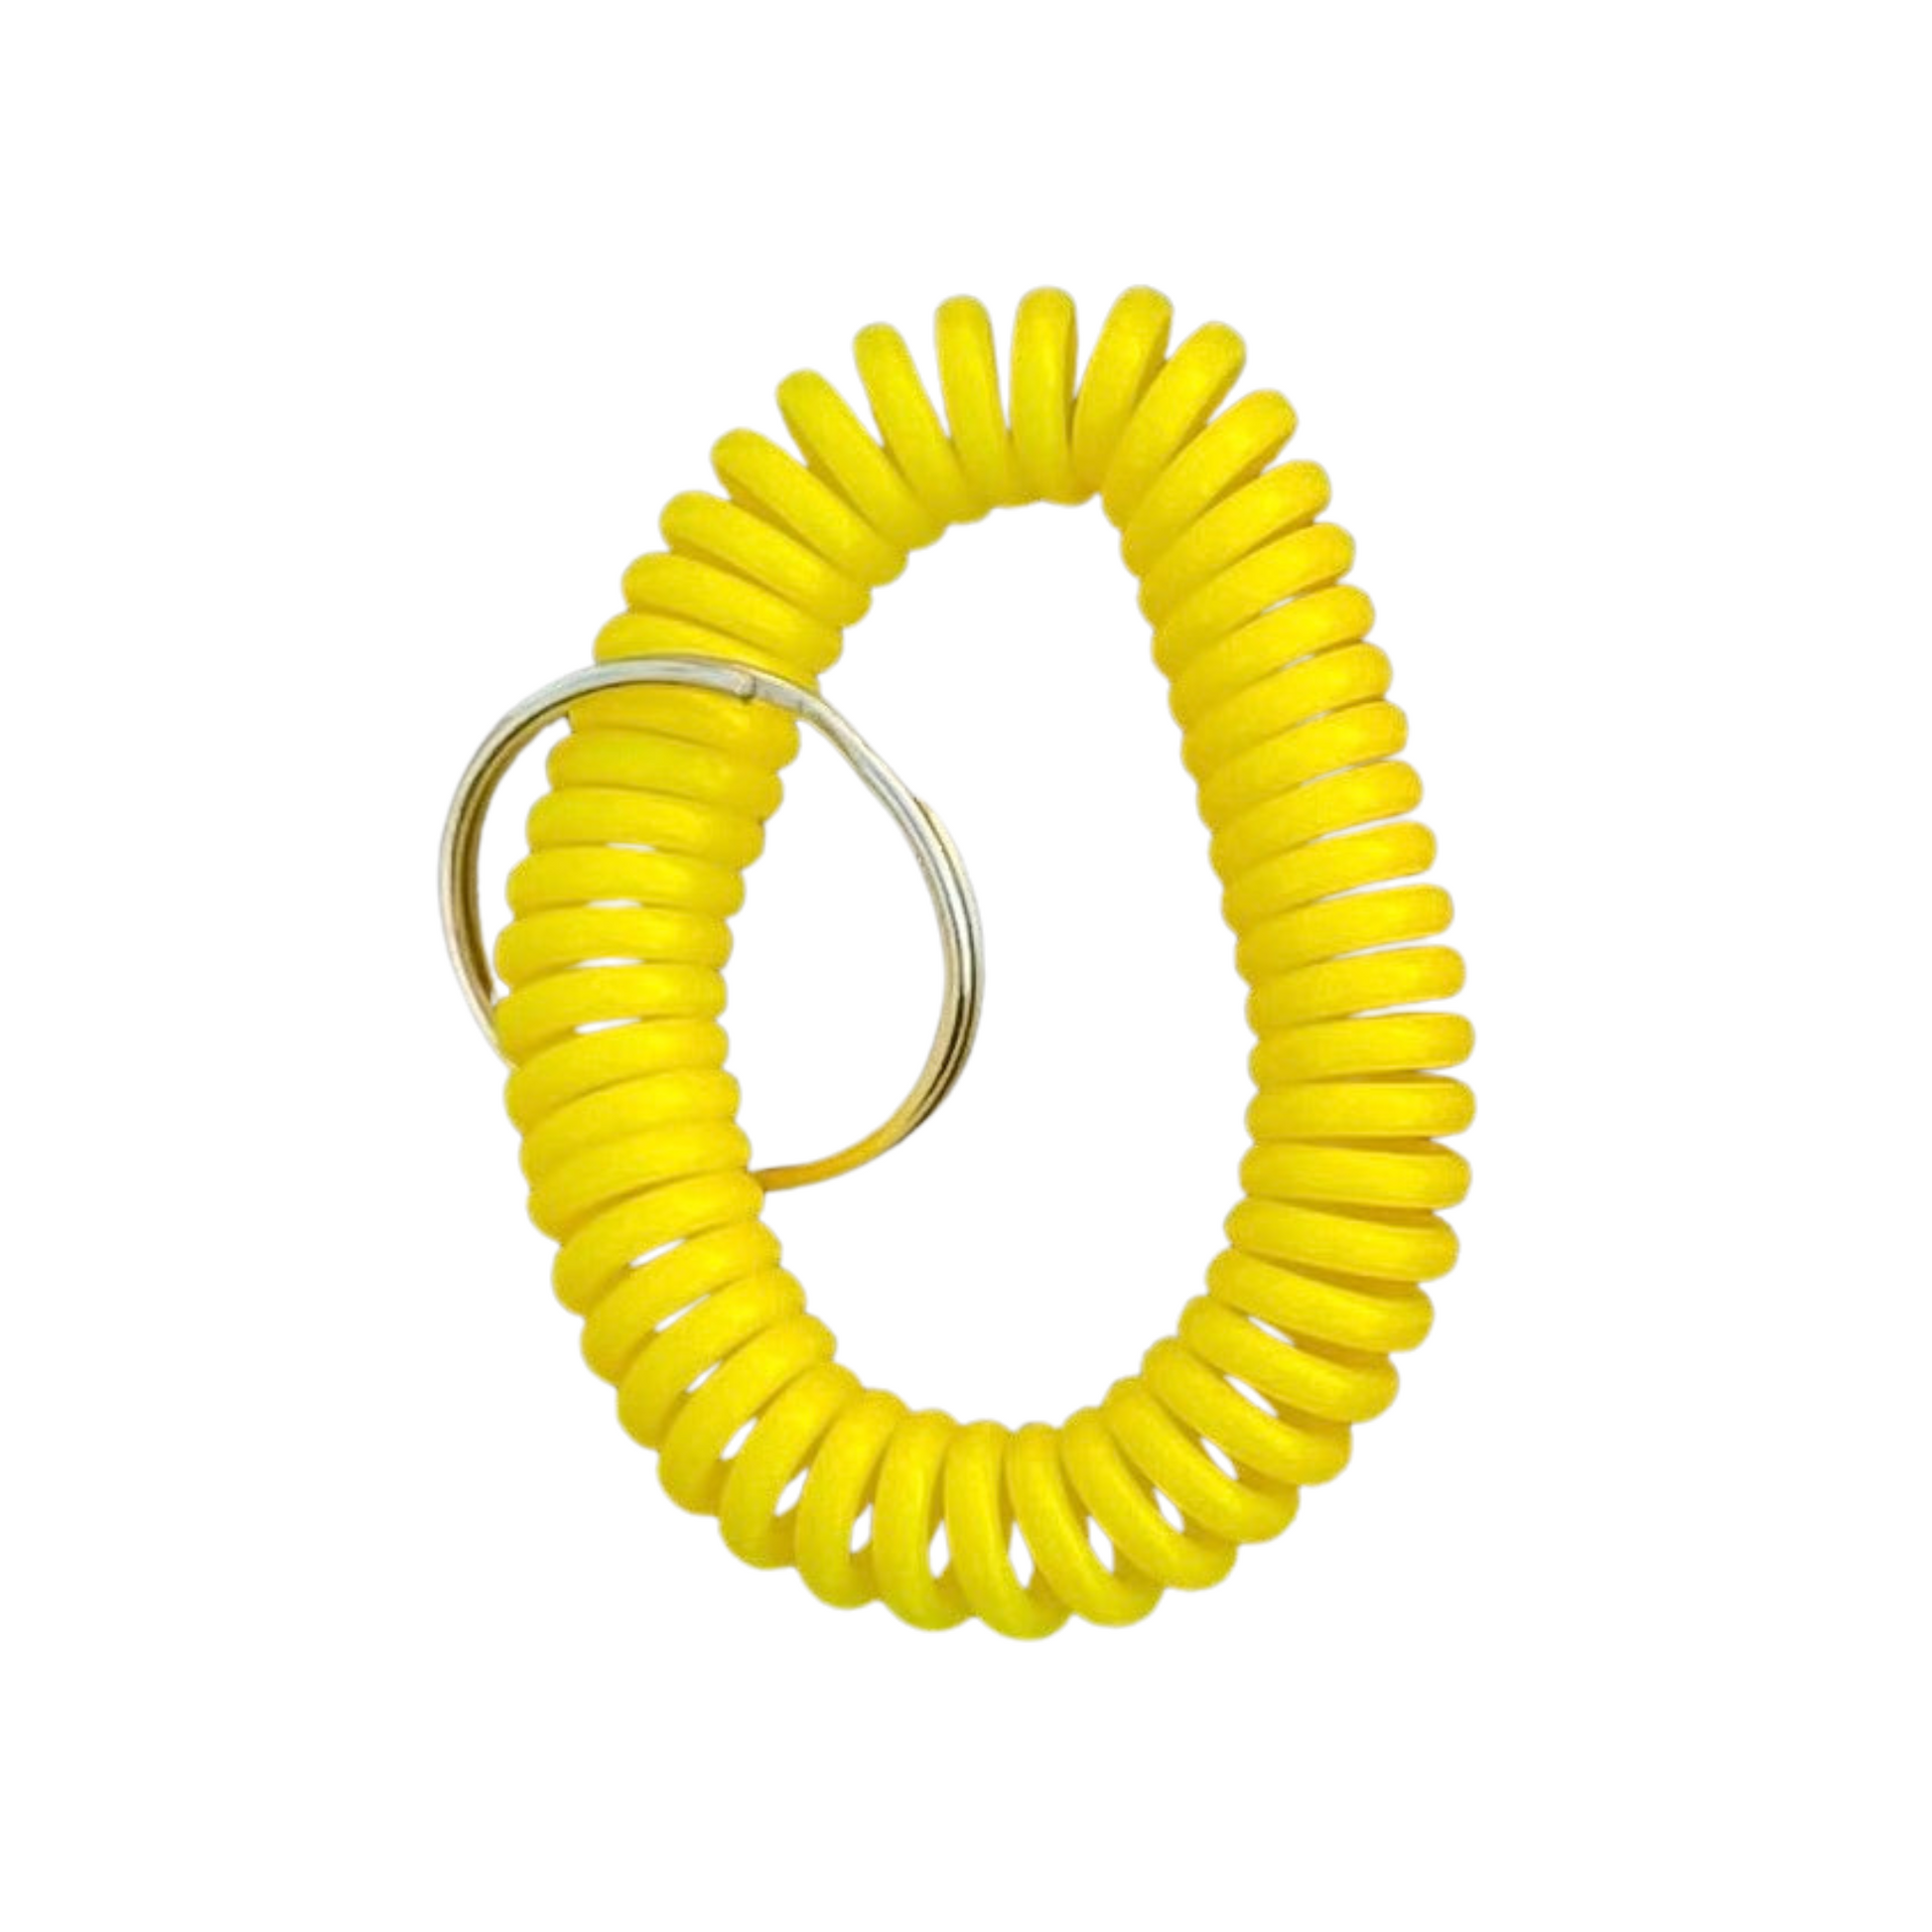 Stretchy Key Bracelet  SPIRIT SPARKPLUGS Yellow  